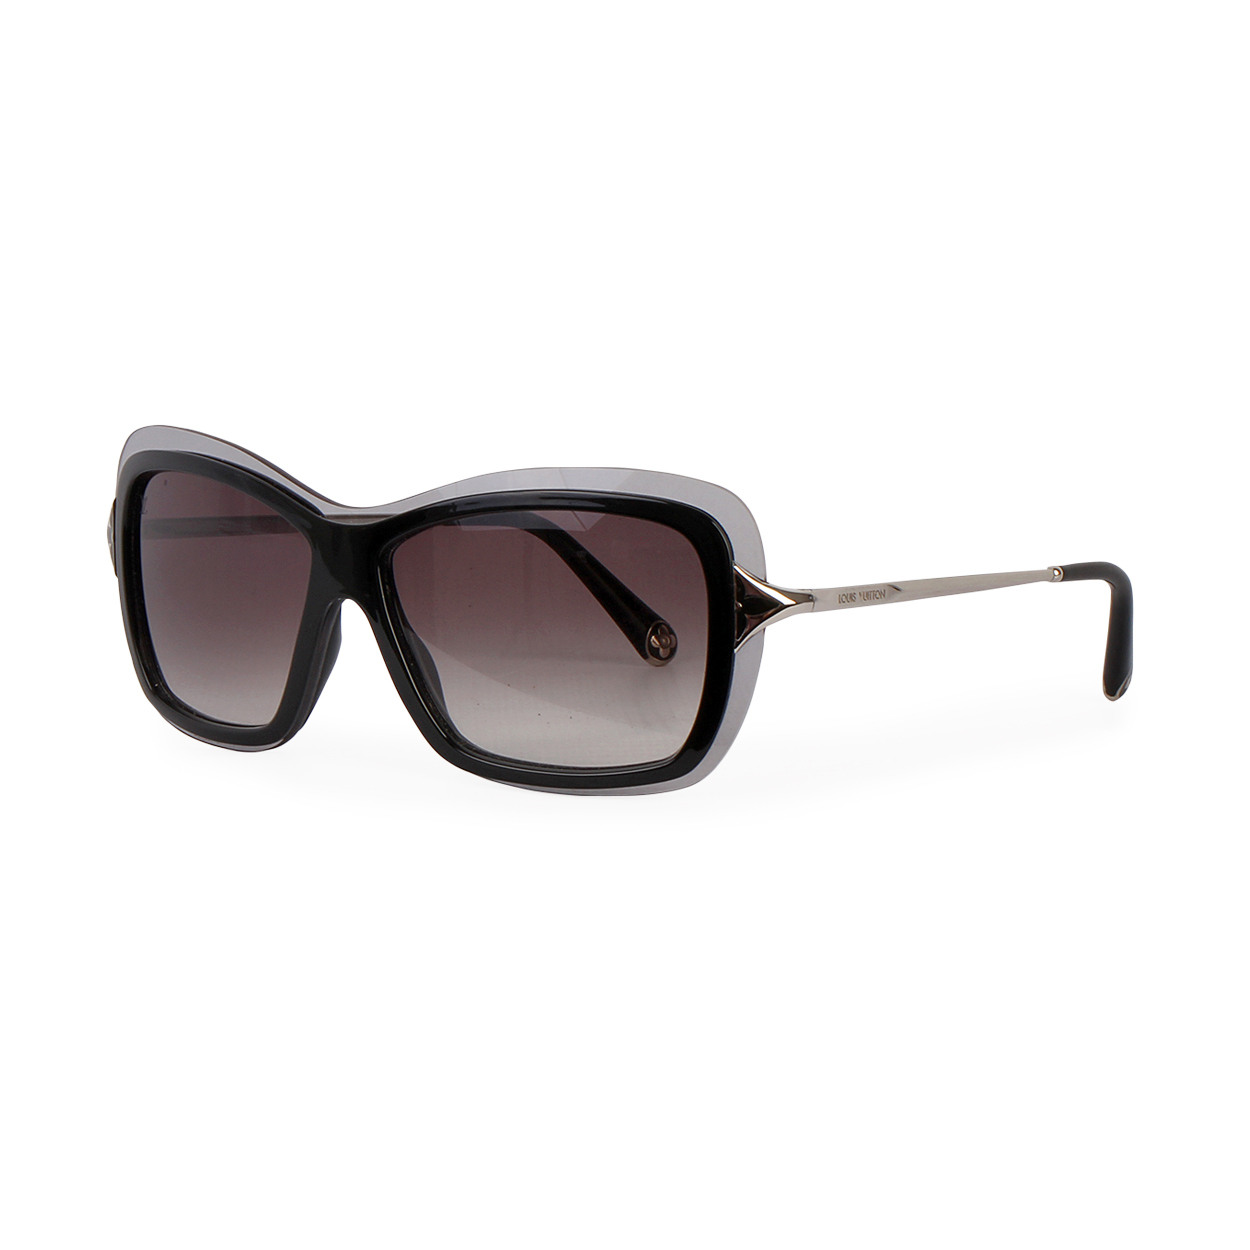 Louis Vuitton Silver/Black Z0493W Poppy Frame Sunglasses Louis Vuitton